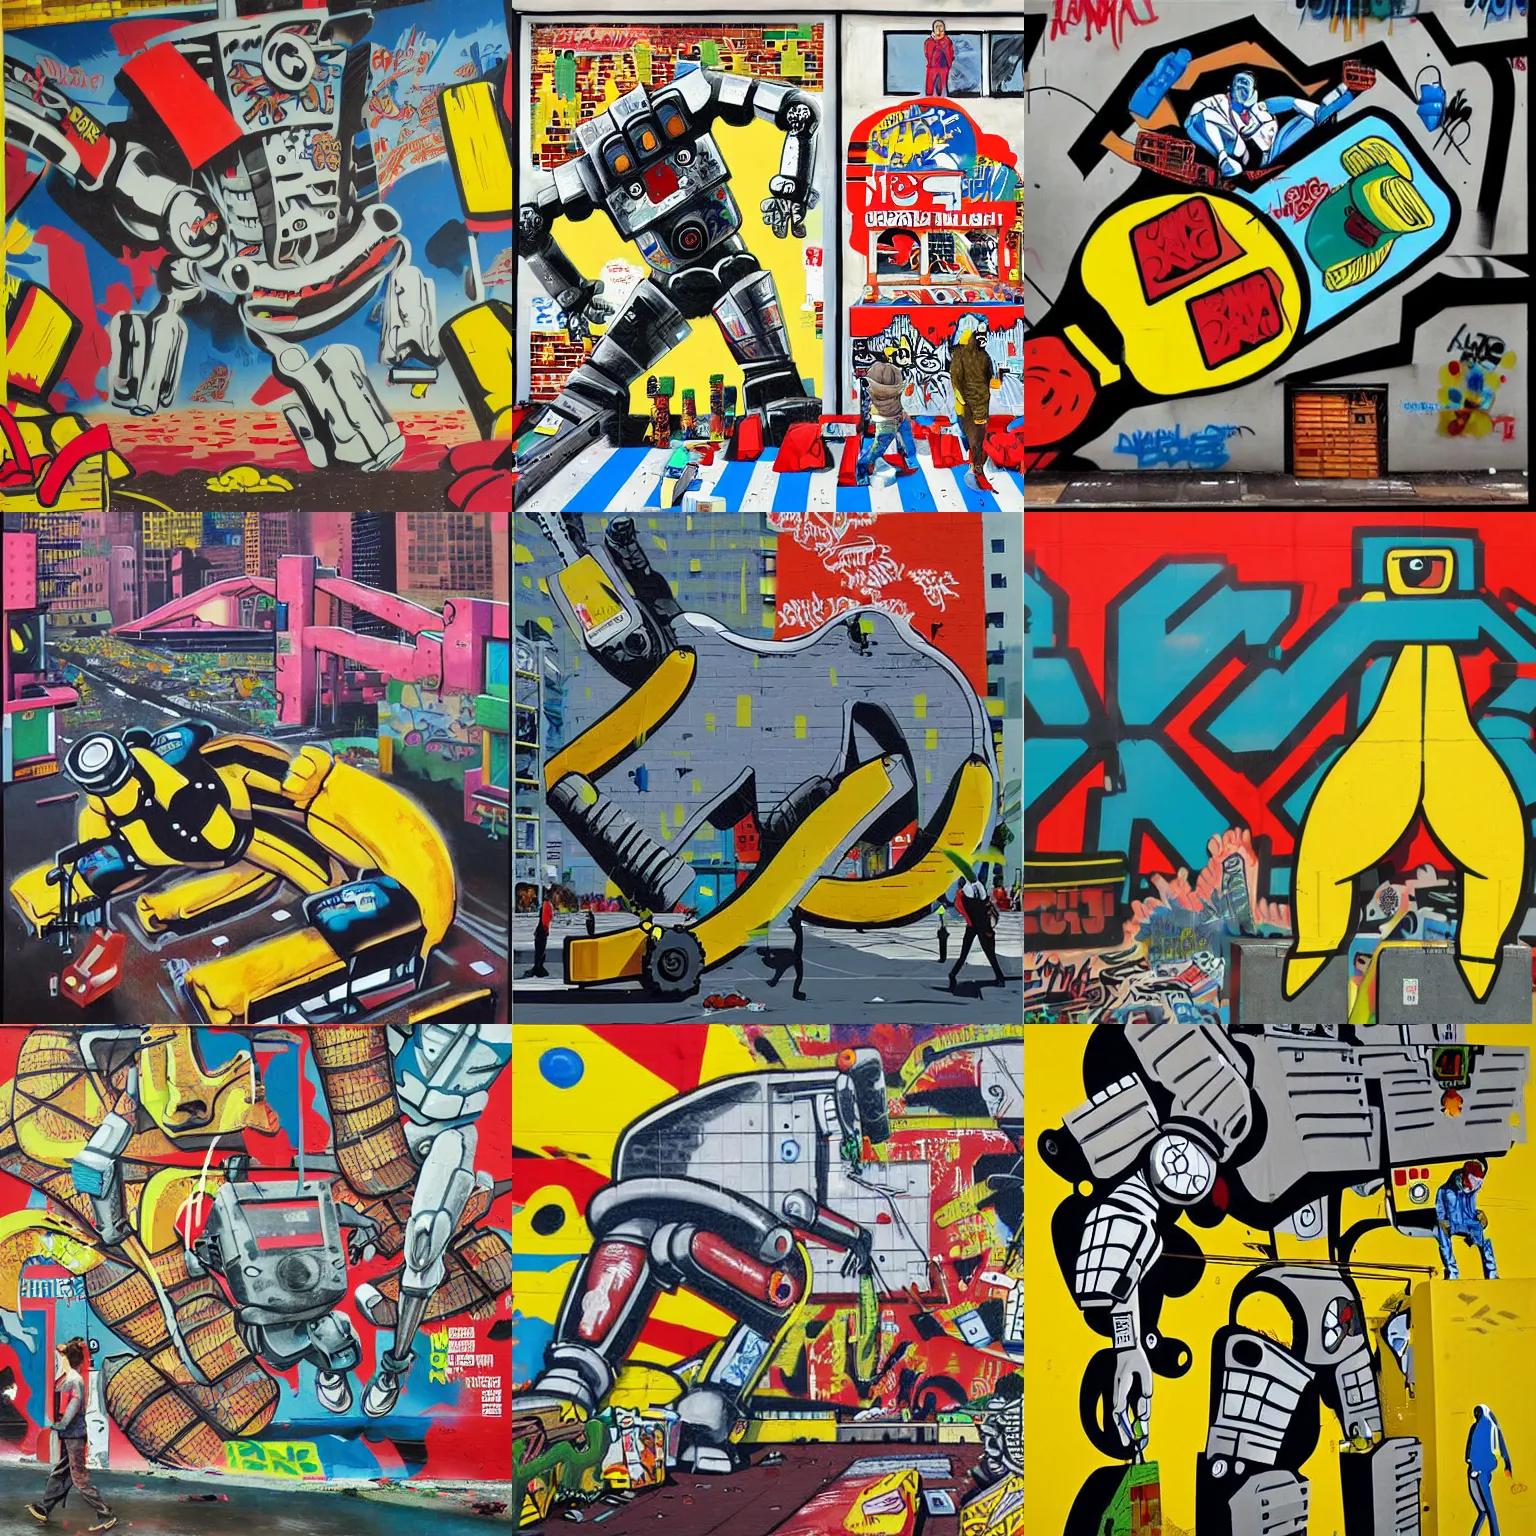 Prompt: giant robot slips on a banana, graffiti art, dystopian art, poster art by david wojnarowicz, stuart davis